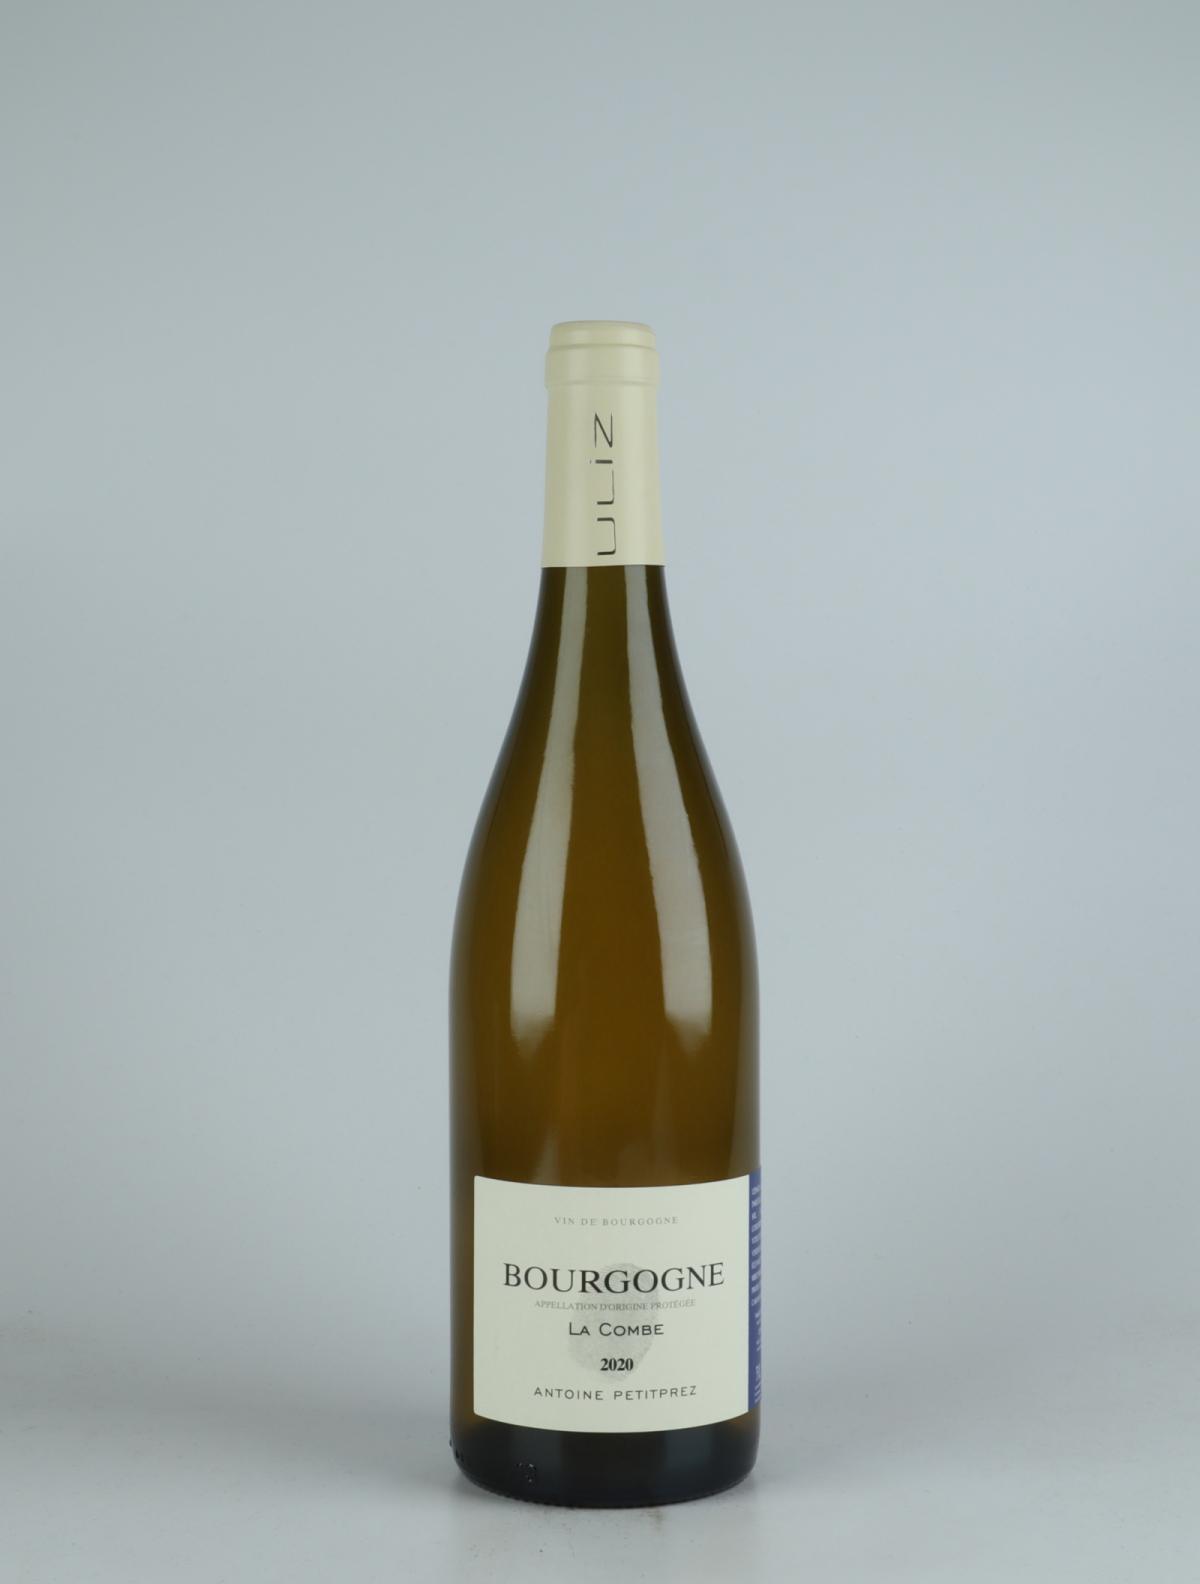 En flaske 2020 Bourgogne Blanc - La Combe Hvidvin fra Antoine Petitprez, Bourgogne i Frankrig